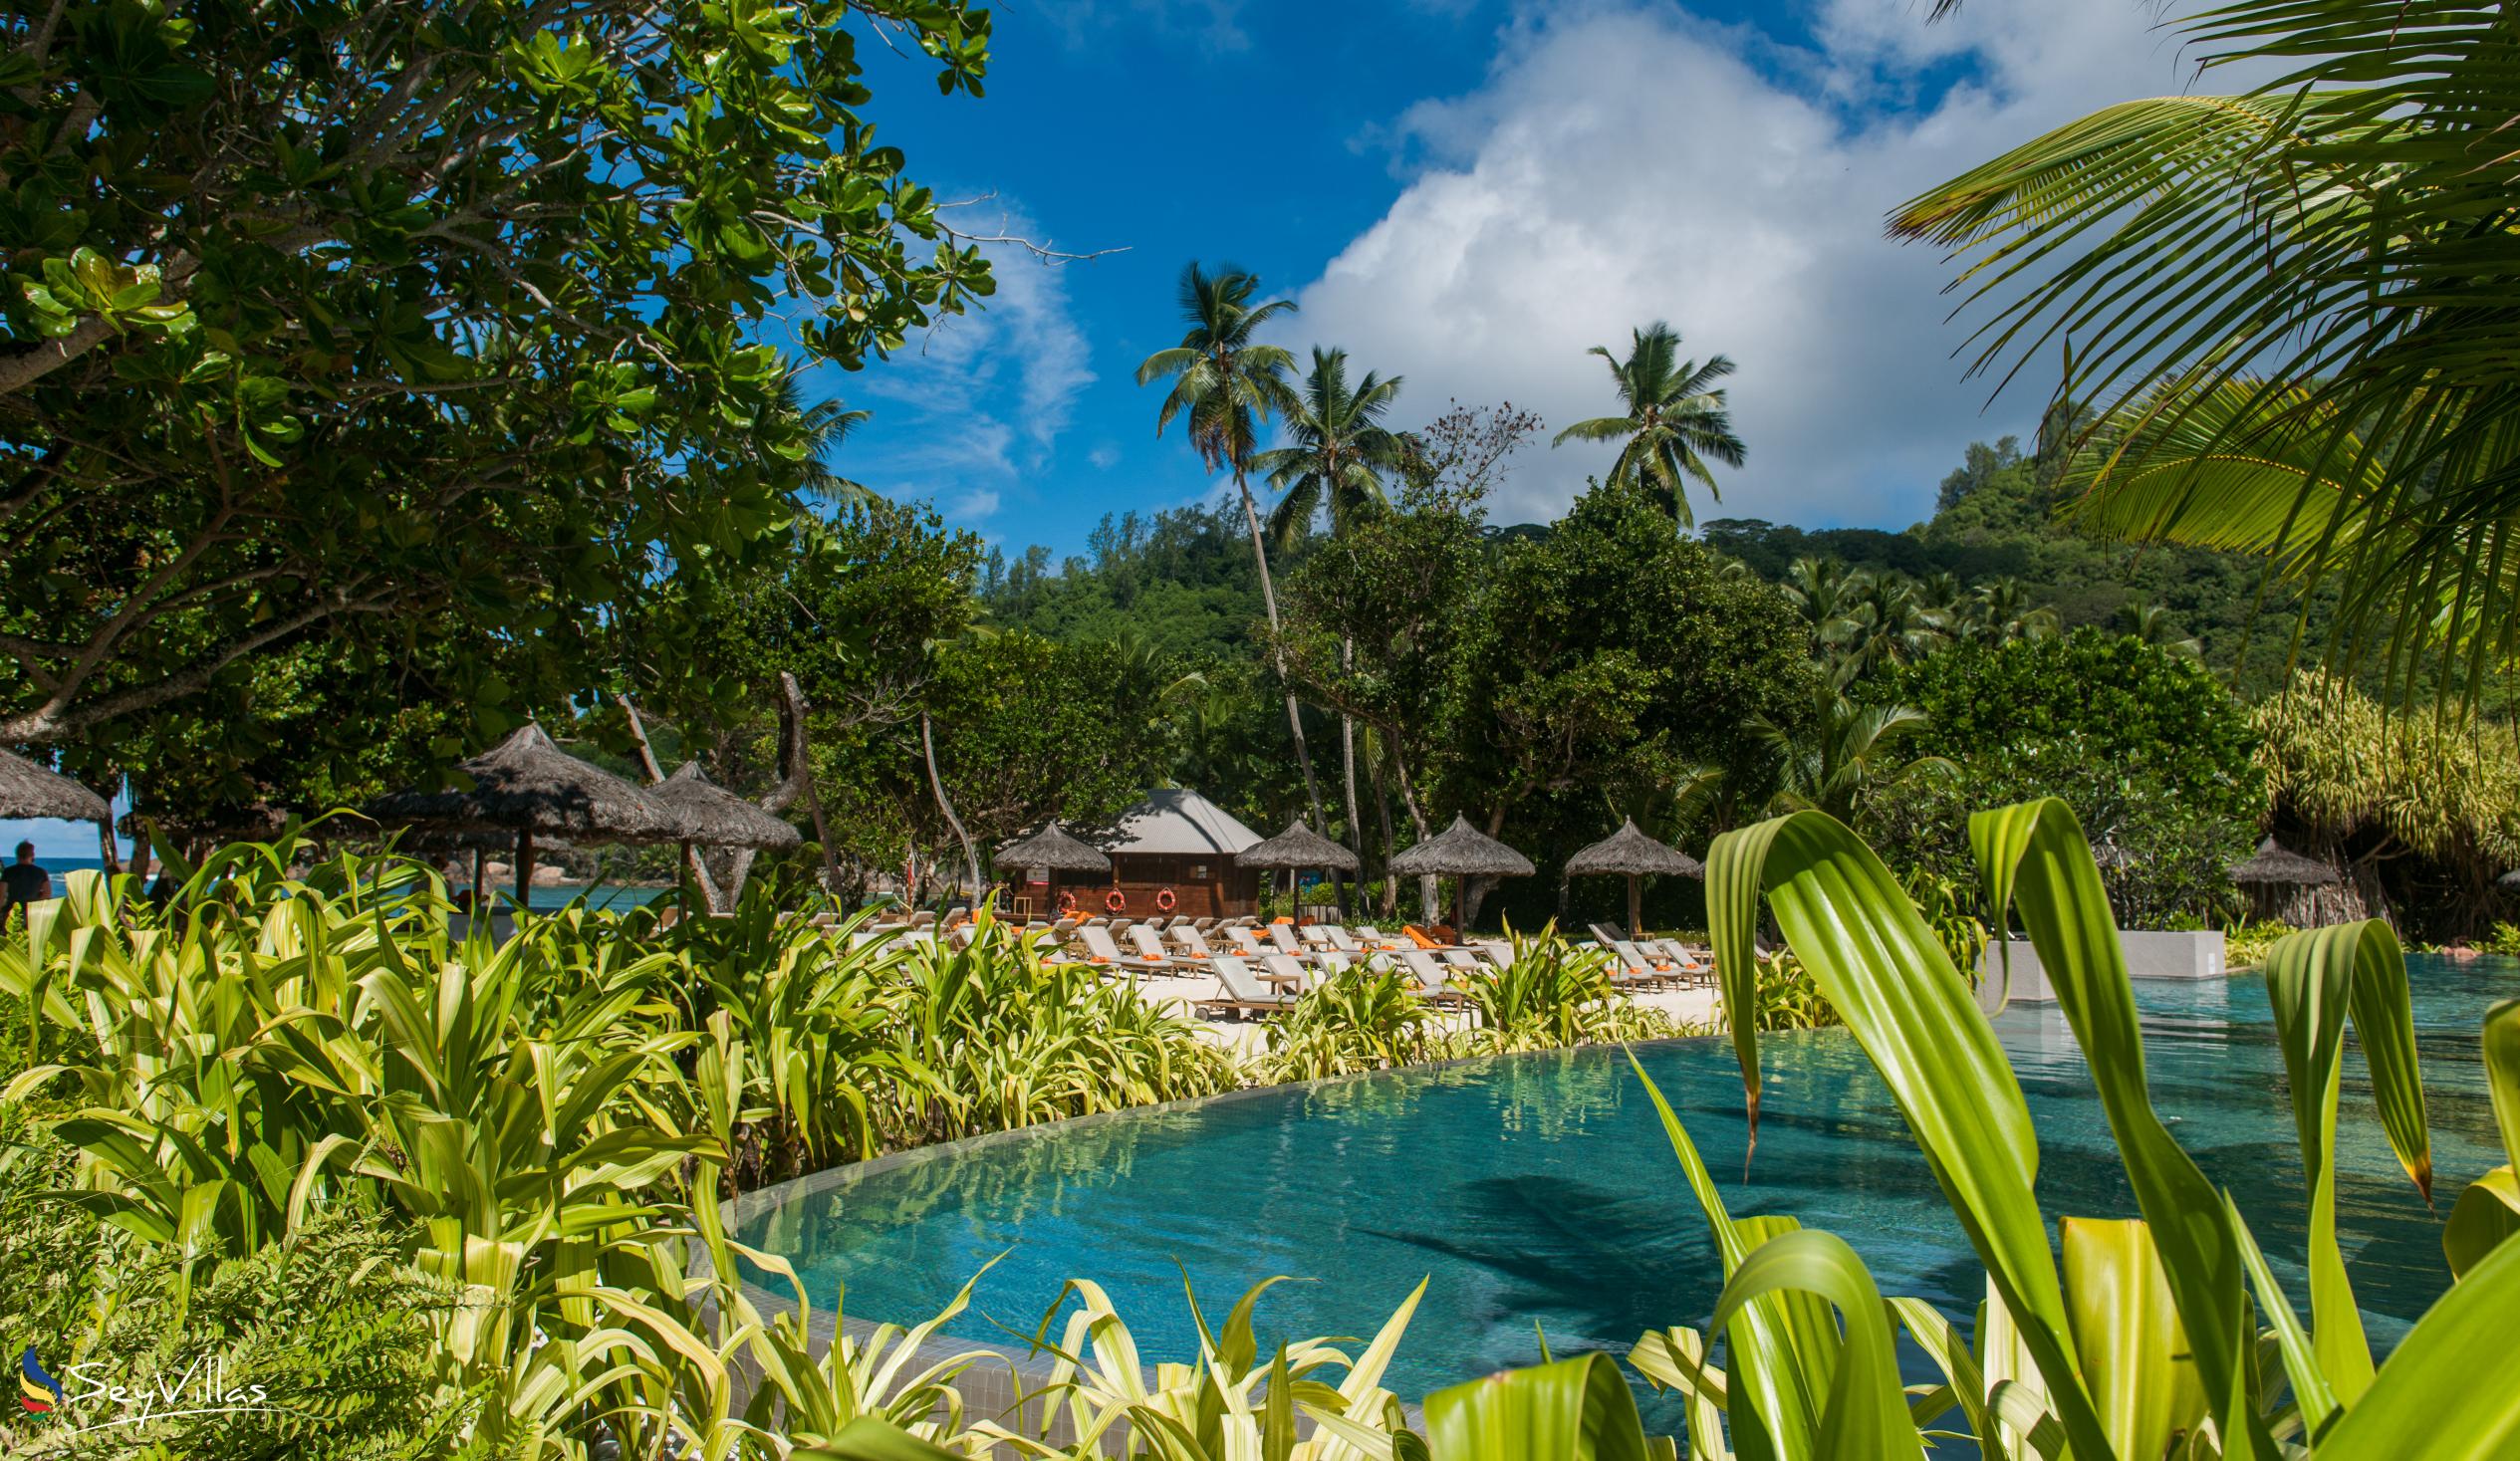 Photo 19: Kempinski Seychelles Resort Baie Lazare - Outdoor area - Mahé (Seychelles)